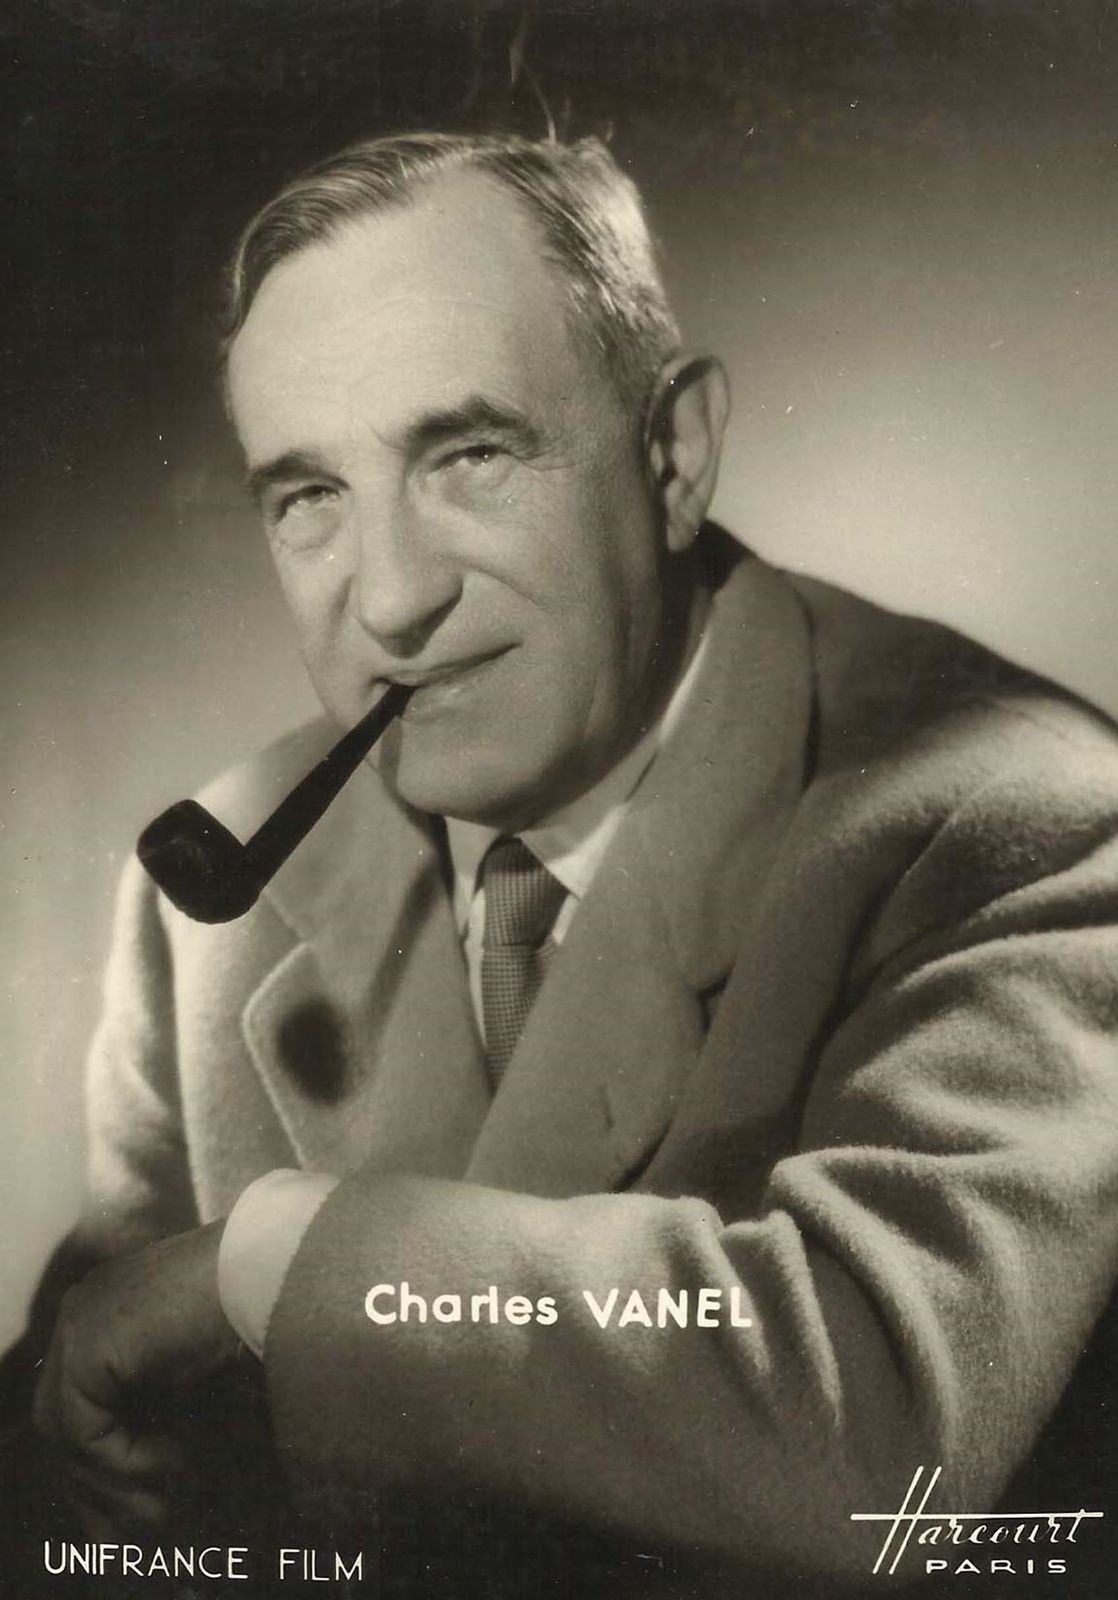 Charles Vanel